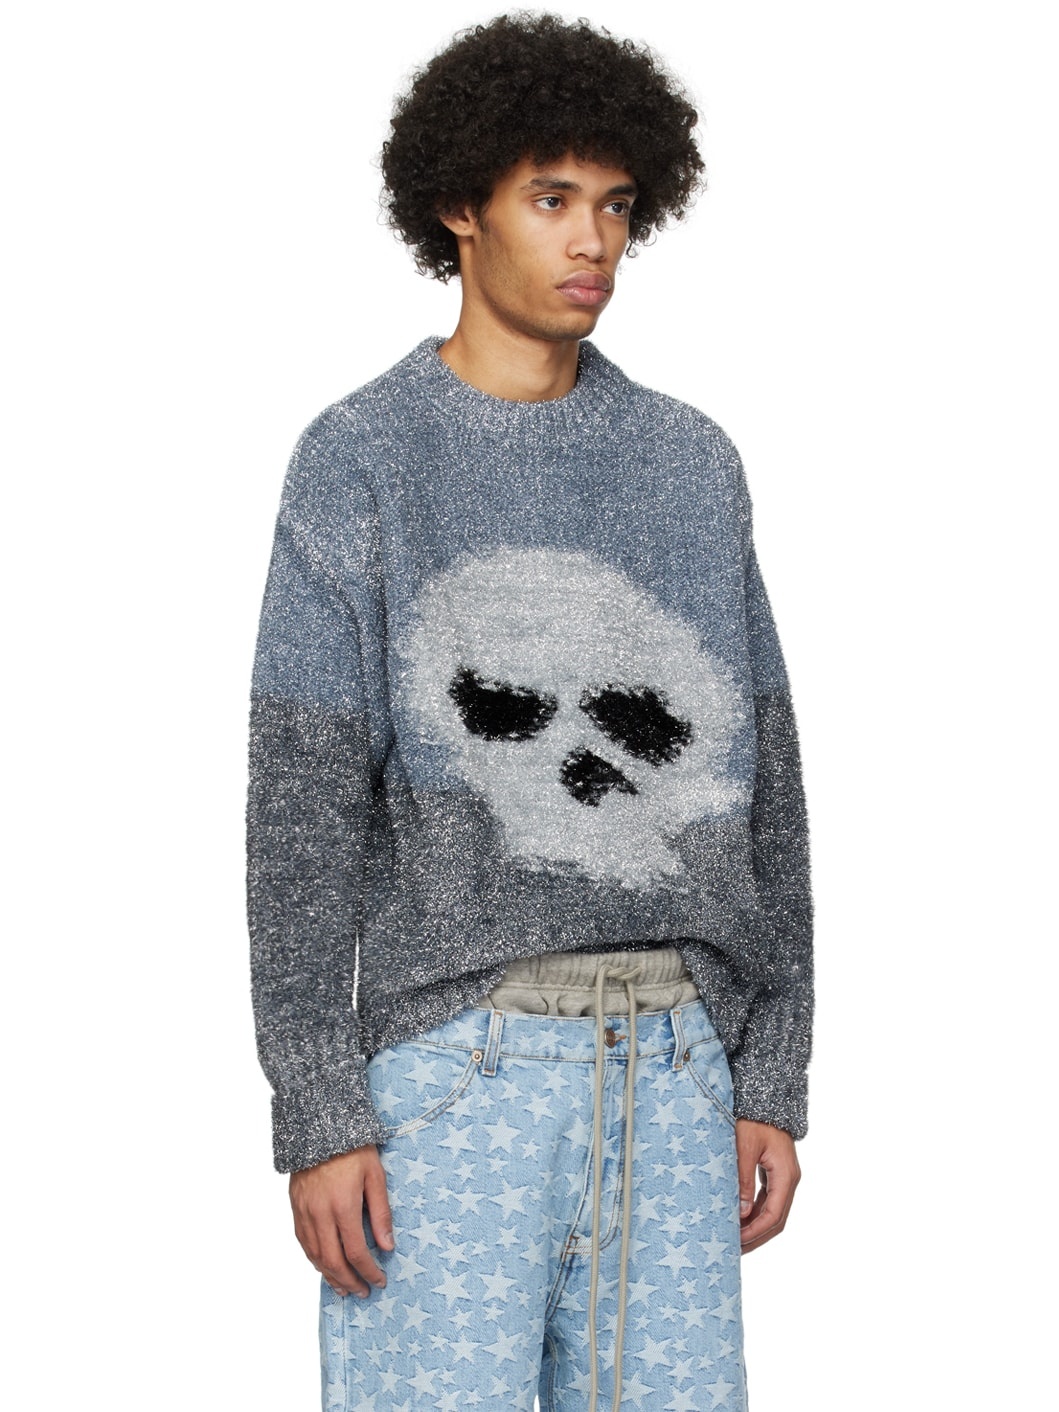 Gray Skull Sweater - 2